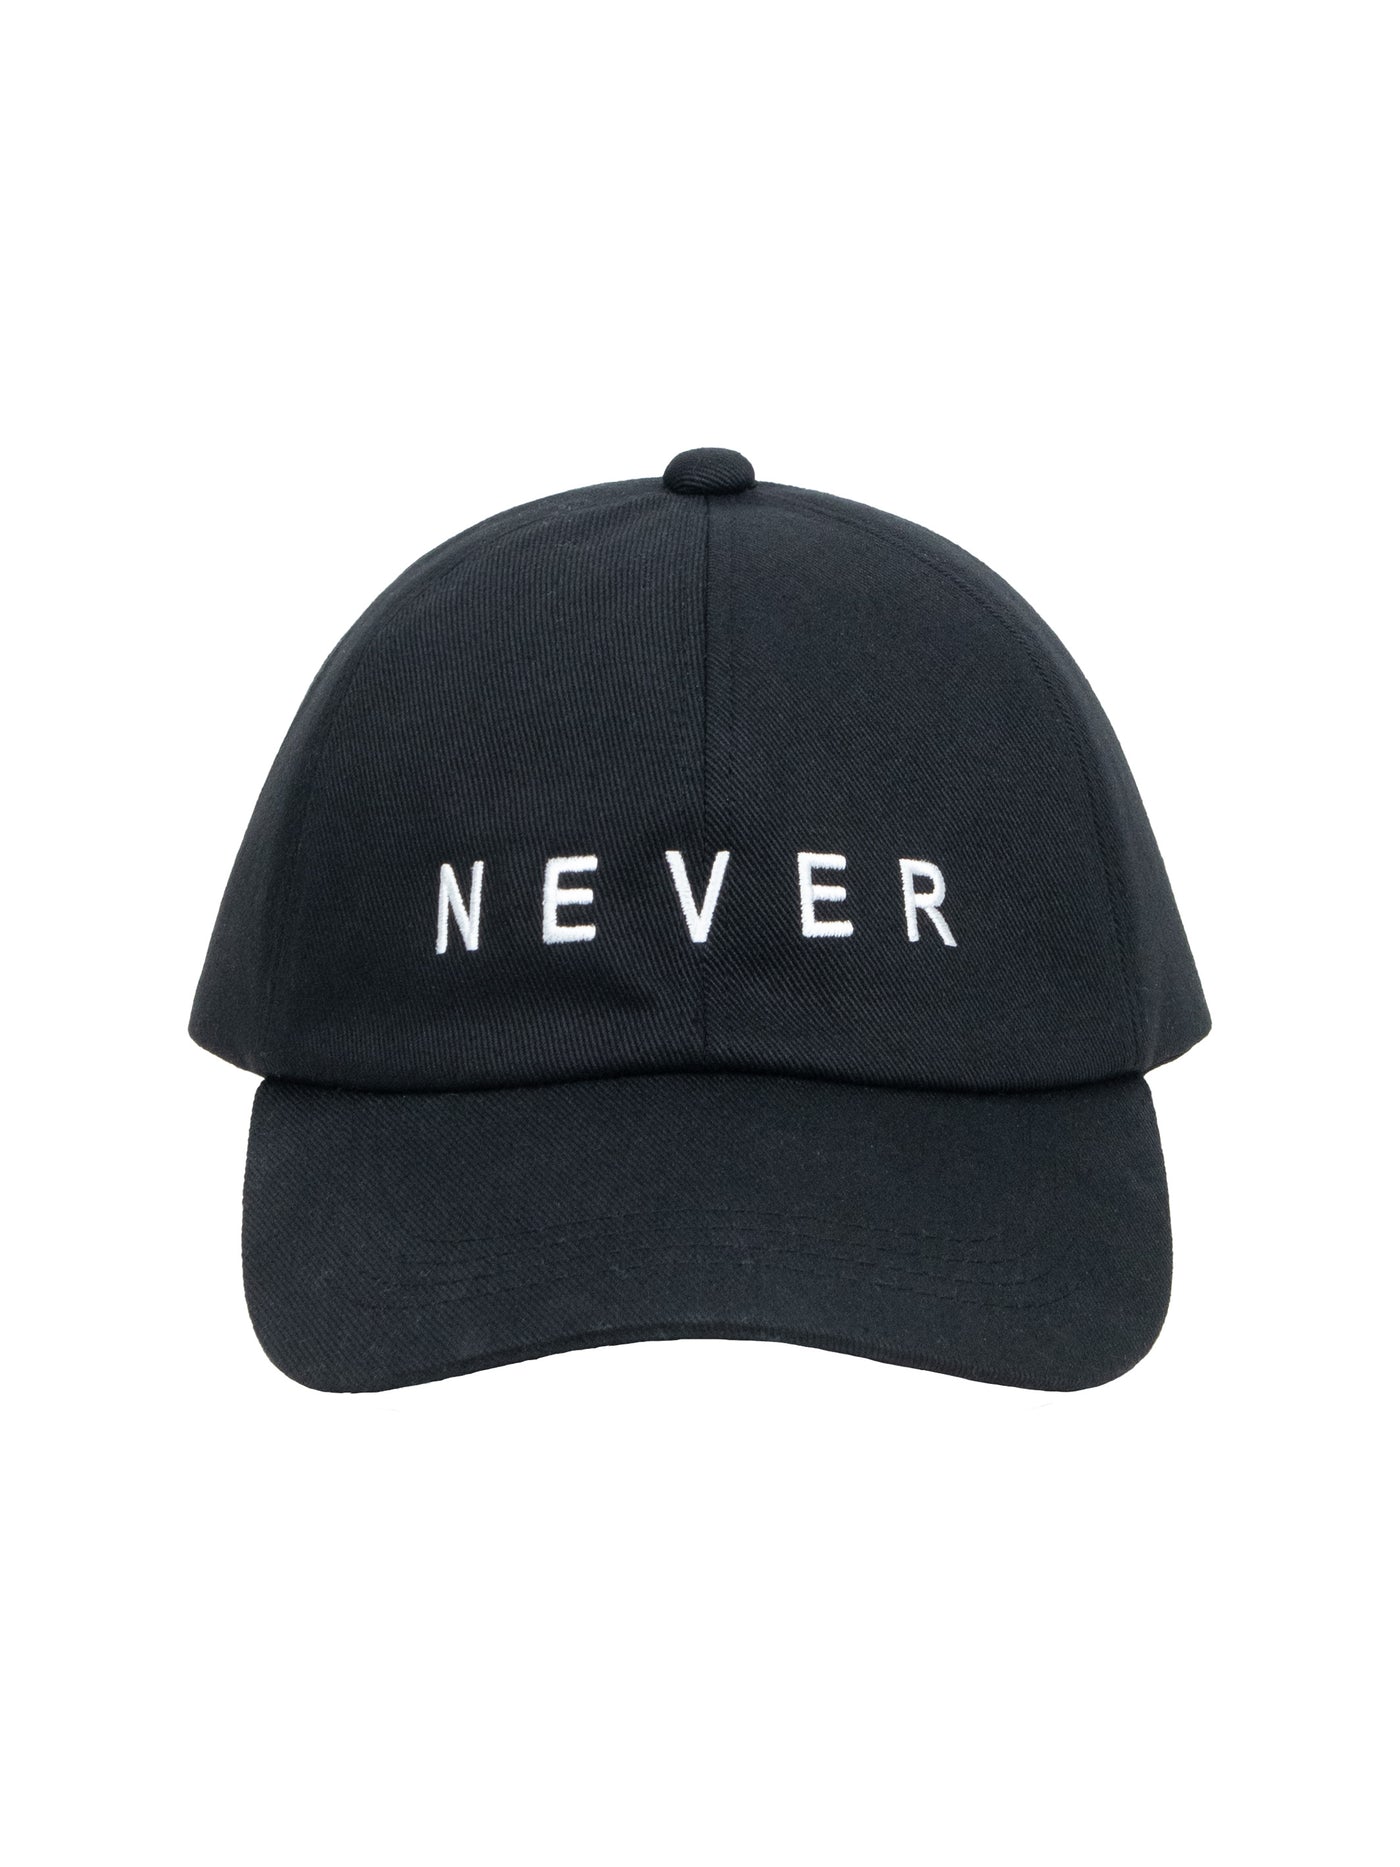 "NEVER SURRENDER" 6p cap